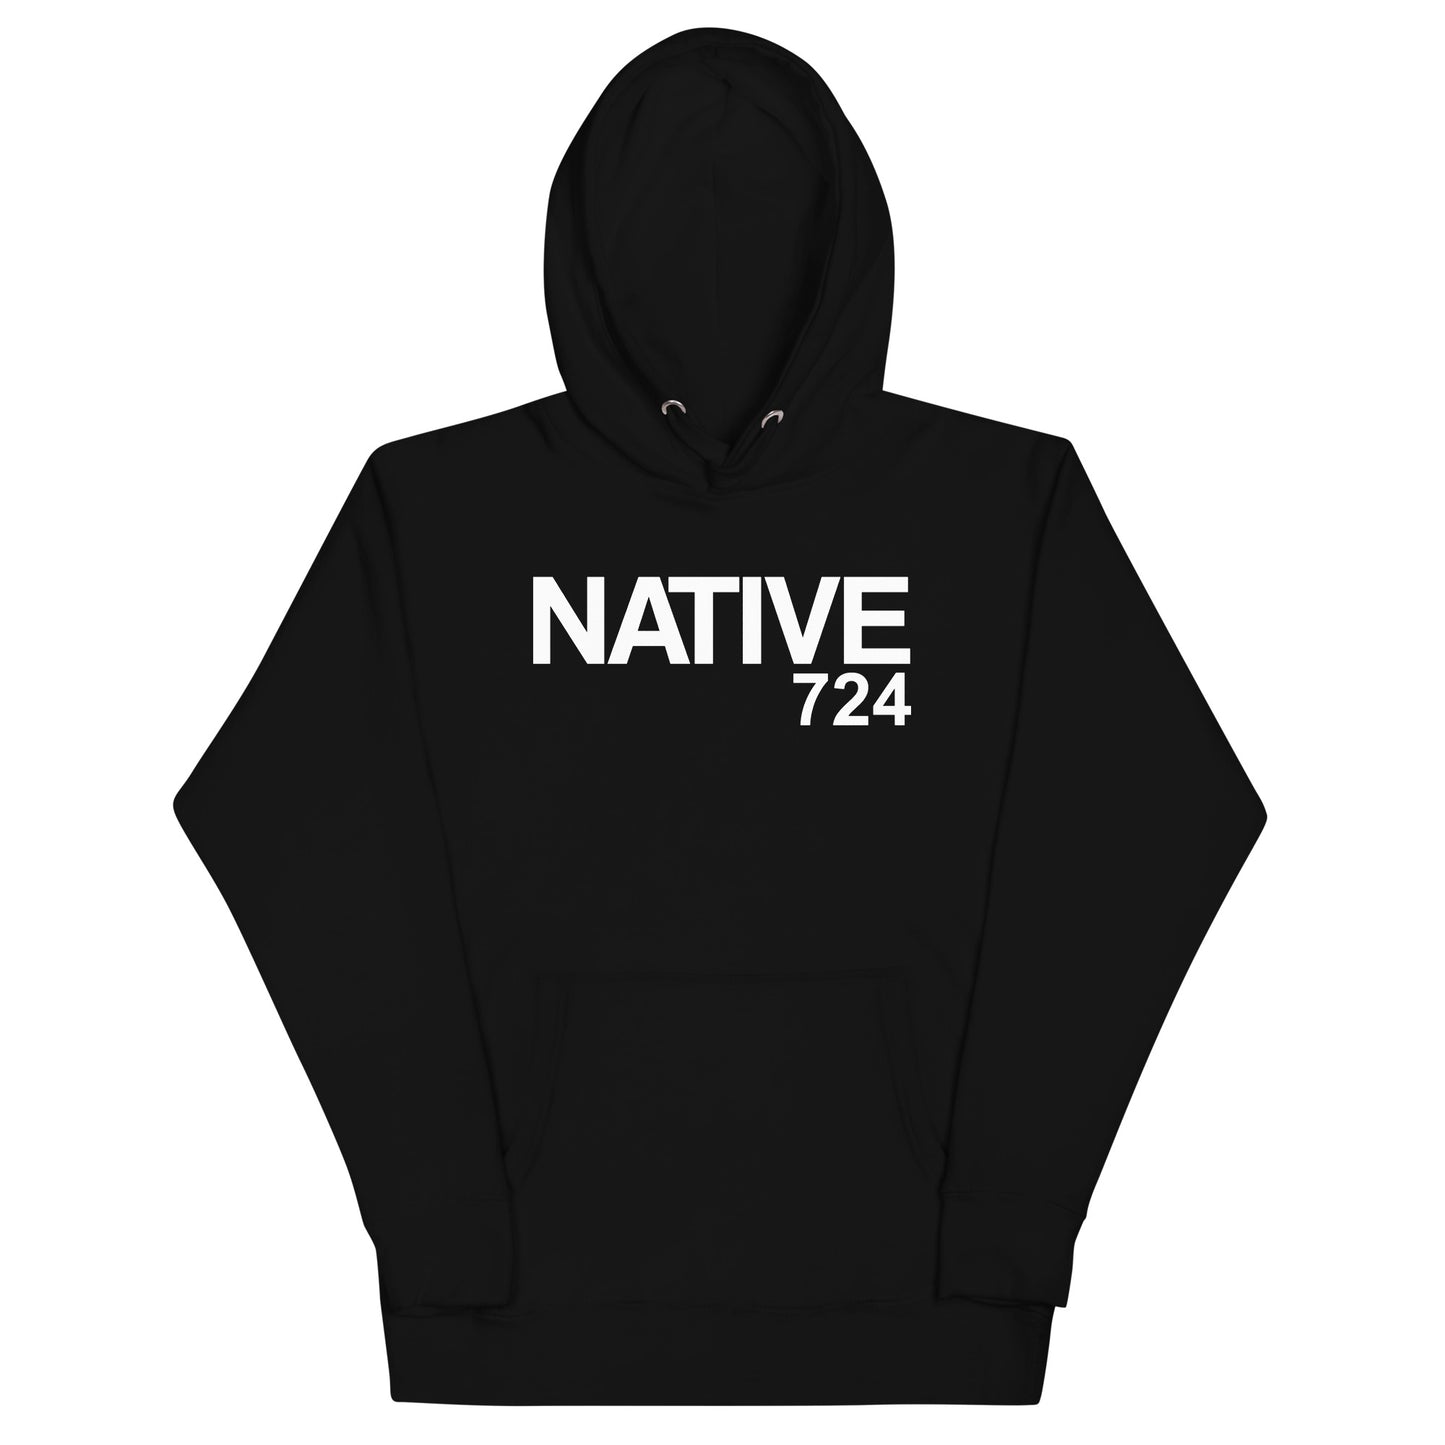 NATIVE 724 Classic Black & White Hoodie